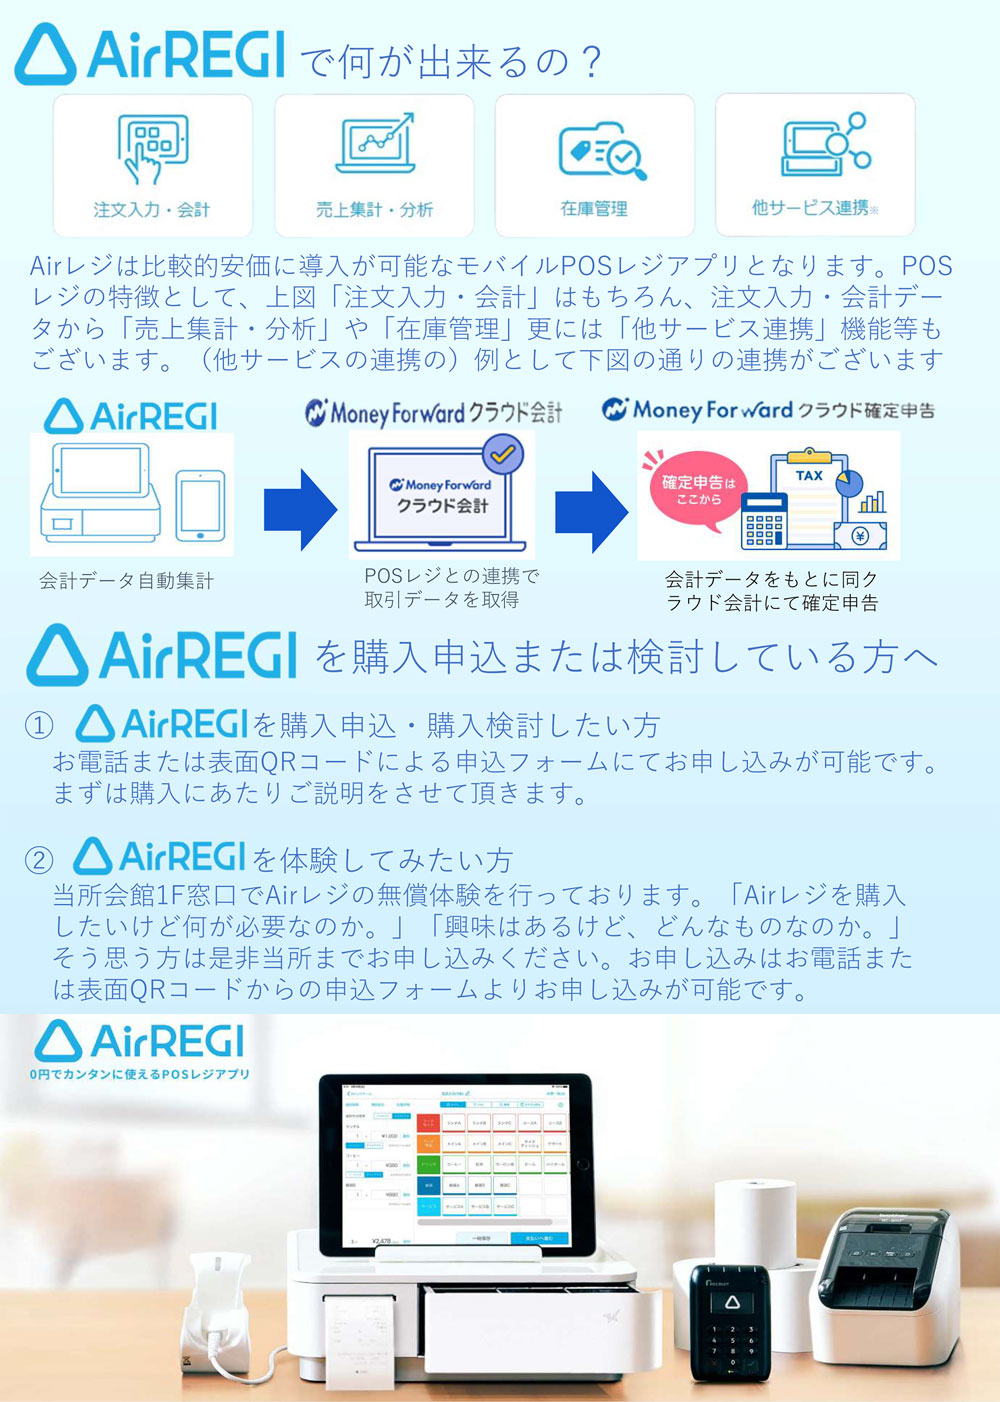 「AirREGI」で何が出来るの？「AirREGI」を購入申込または検討している方へ